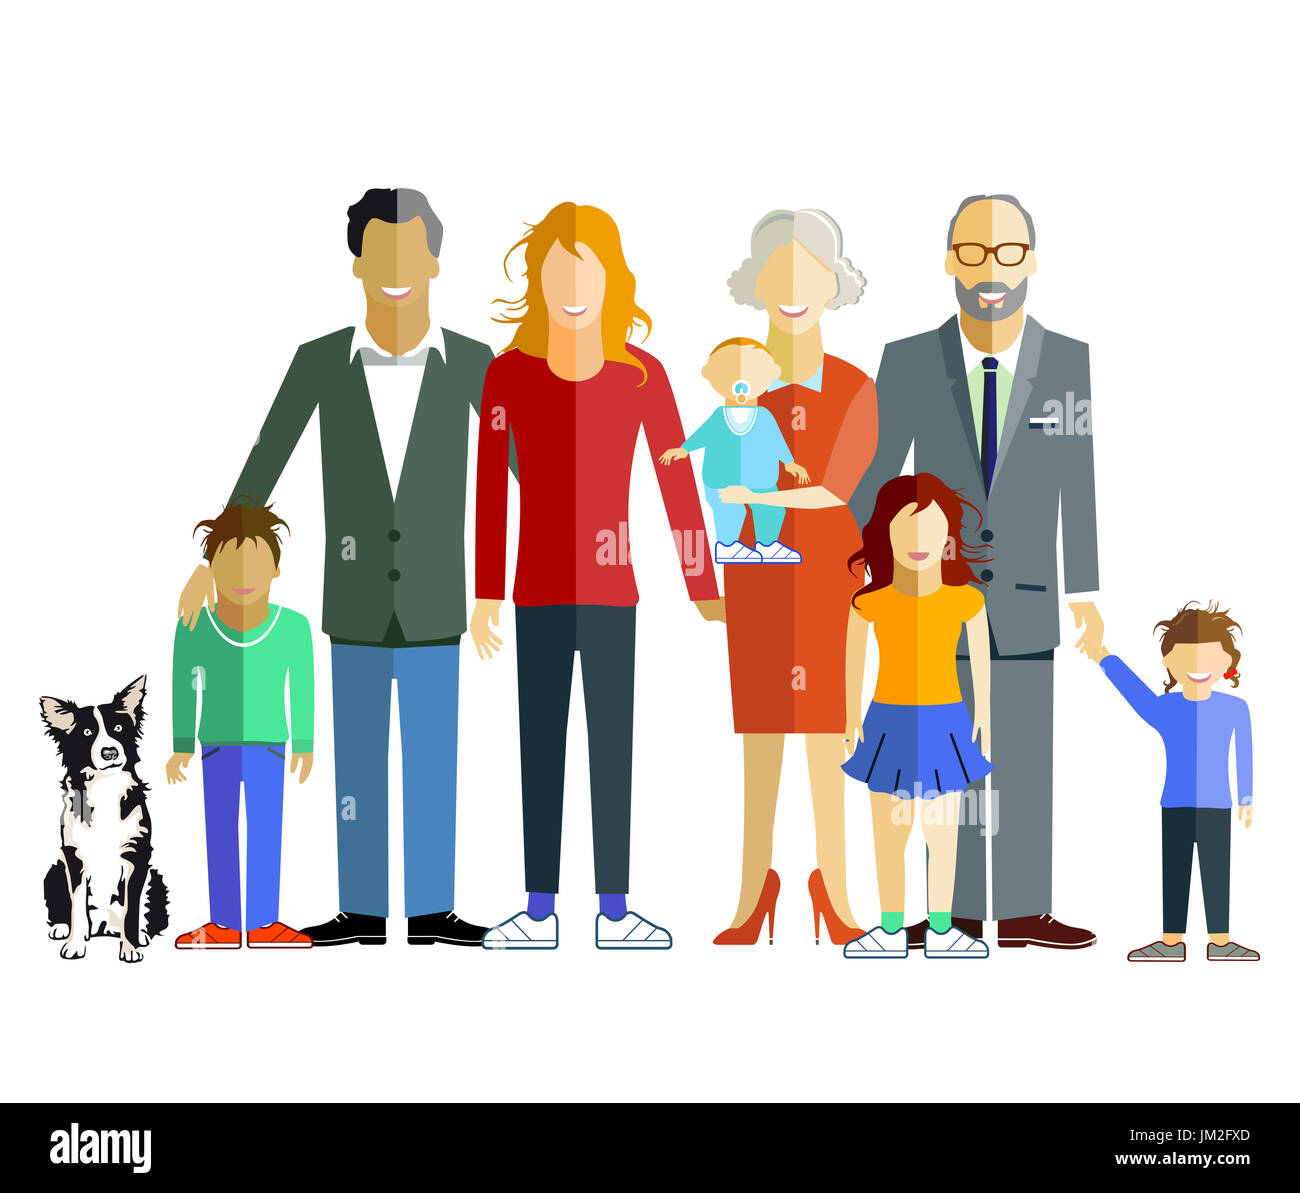 Family generation together, illustration Stock Photo